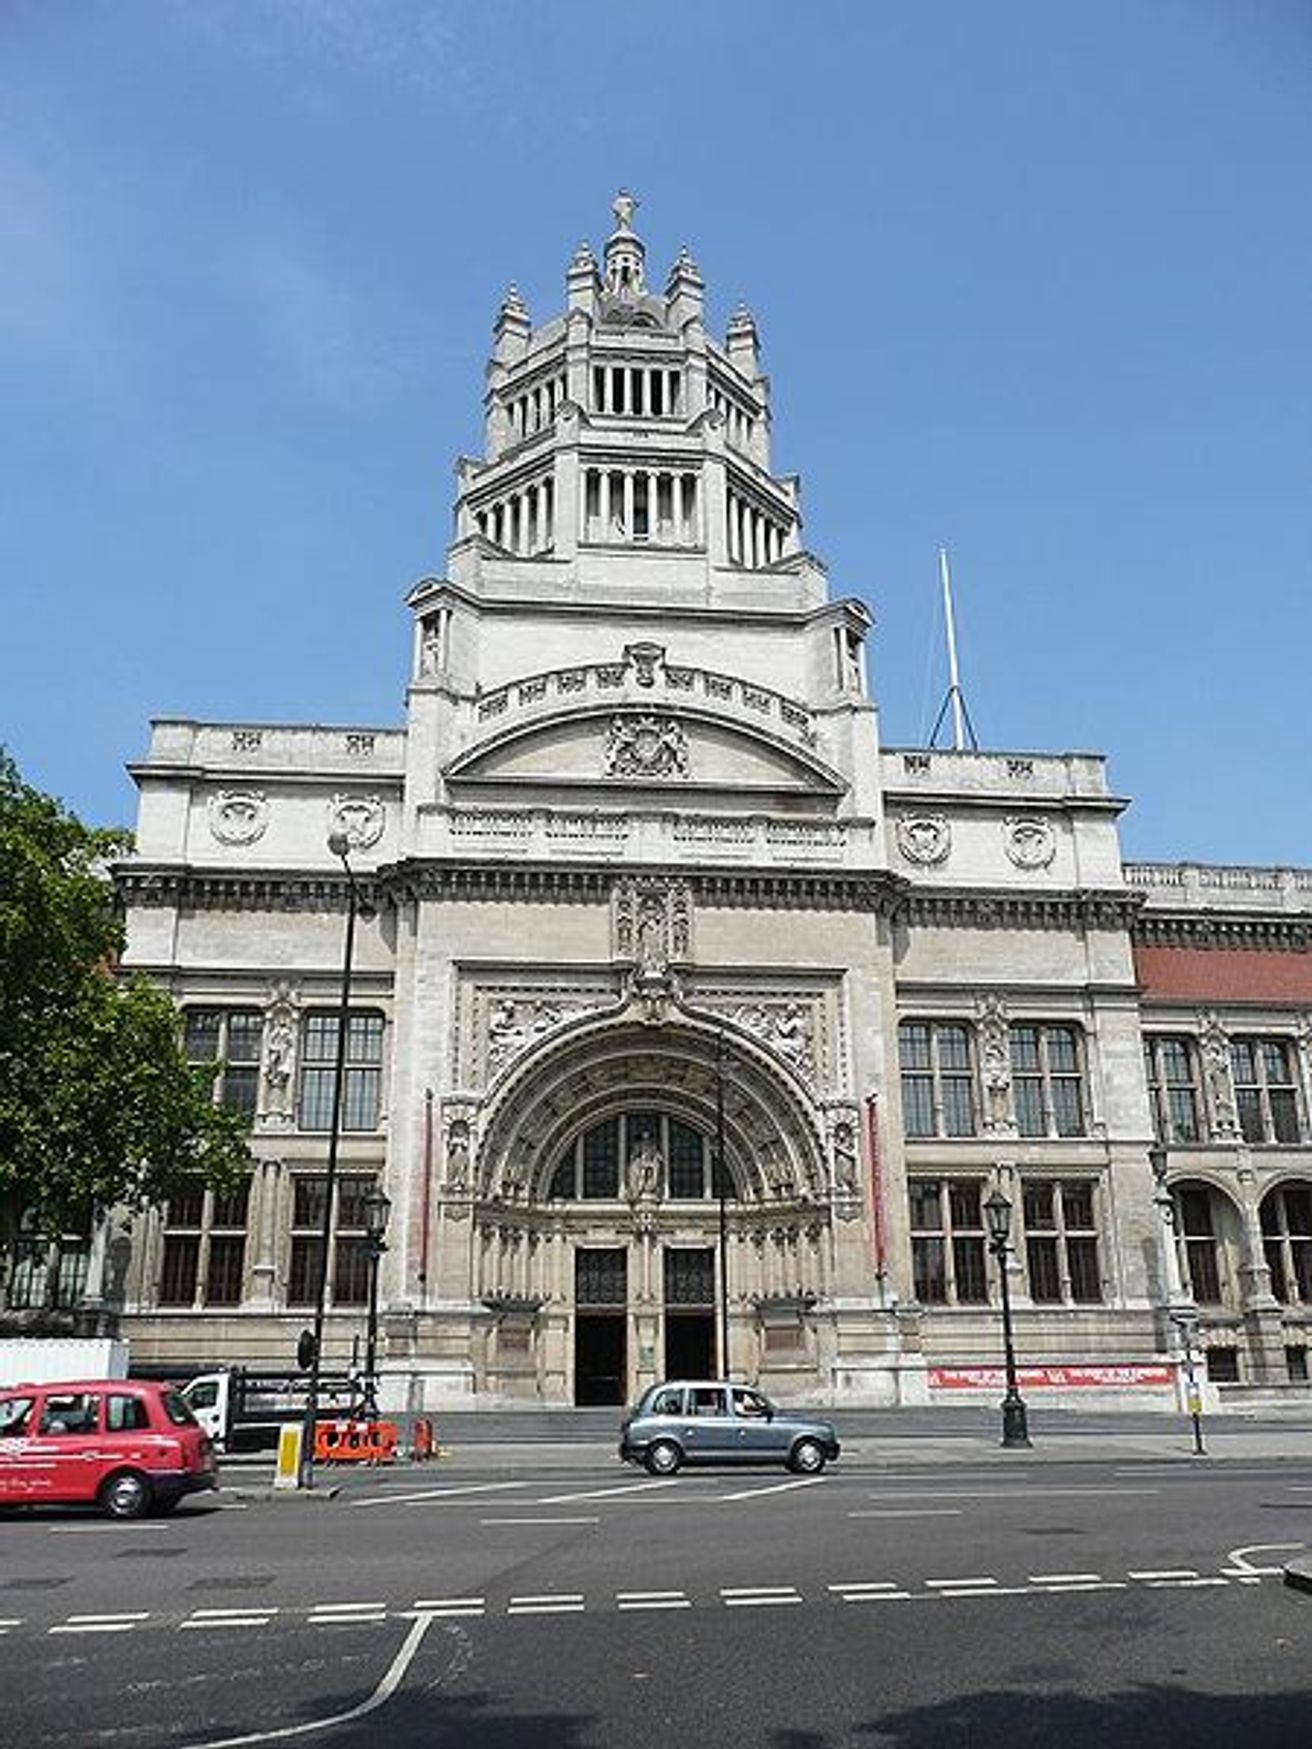 Victoria and Albert Museum - Wikipedia